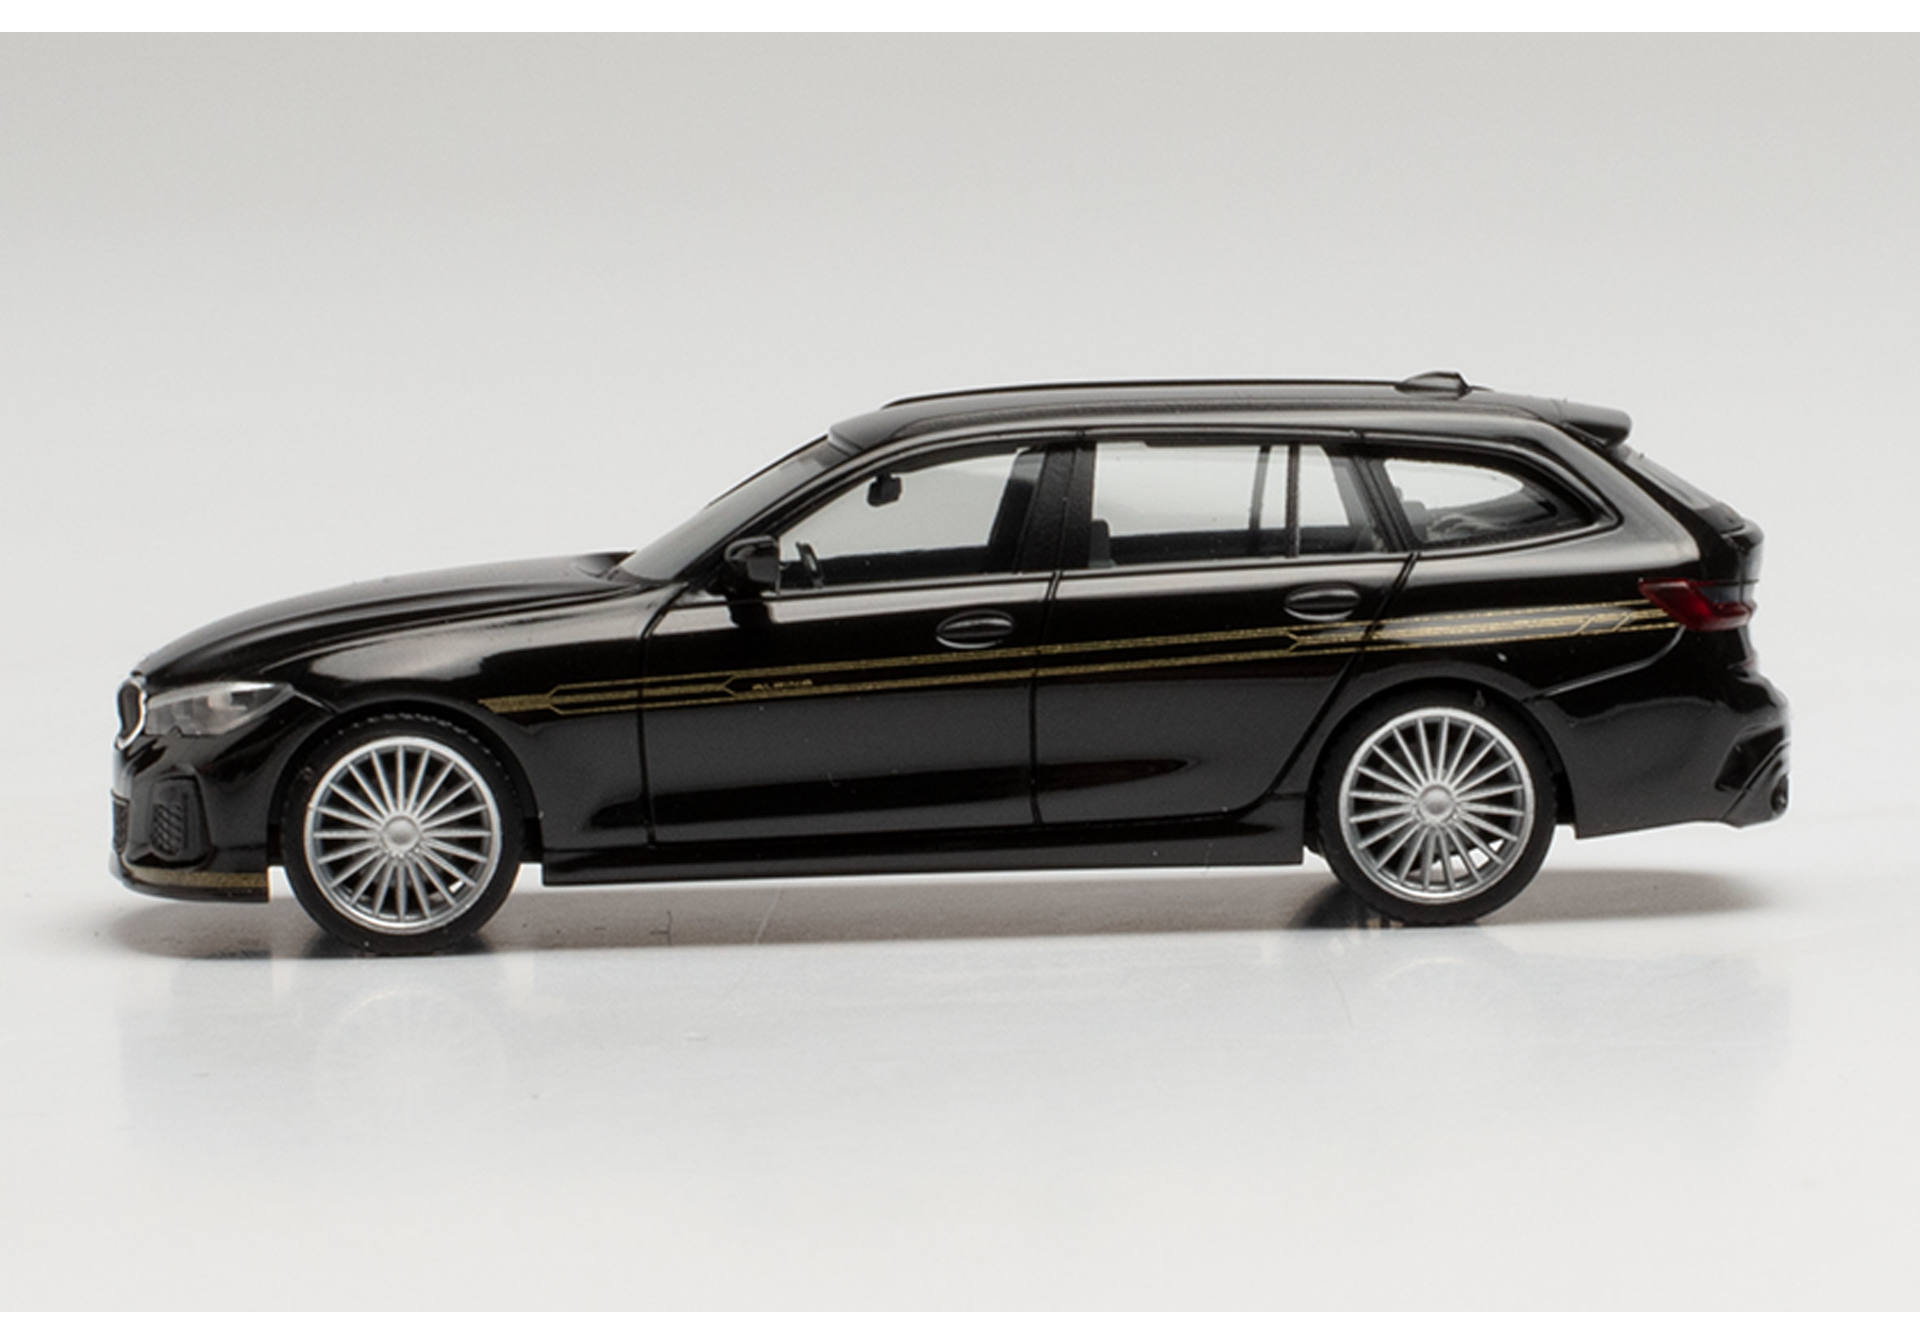 BMW Alpina B3 Touring, brilliant black